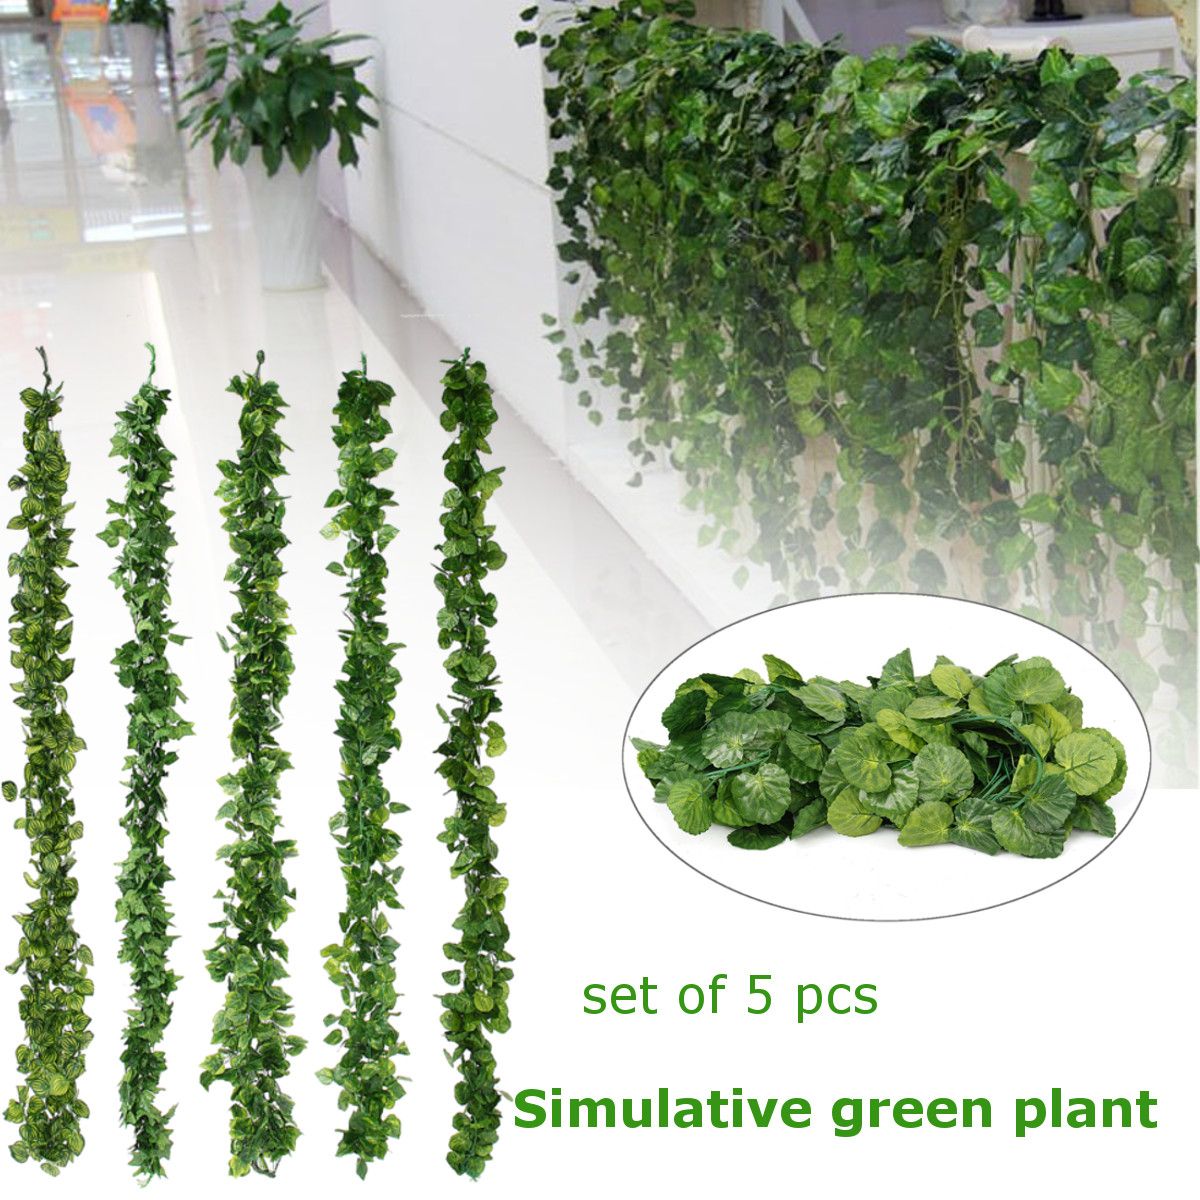 198cm-Artificial-Ivy-Leaf-Vine-Foliage-Green-Hanging-Garland-Plant-Home-Wedding-Decorations-1557782